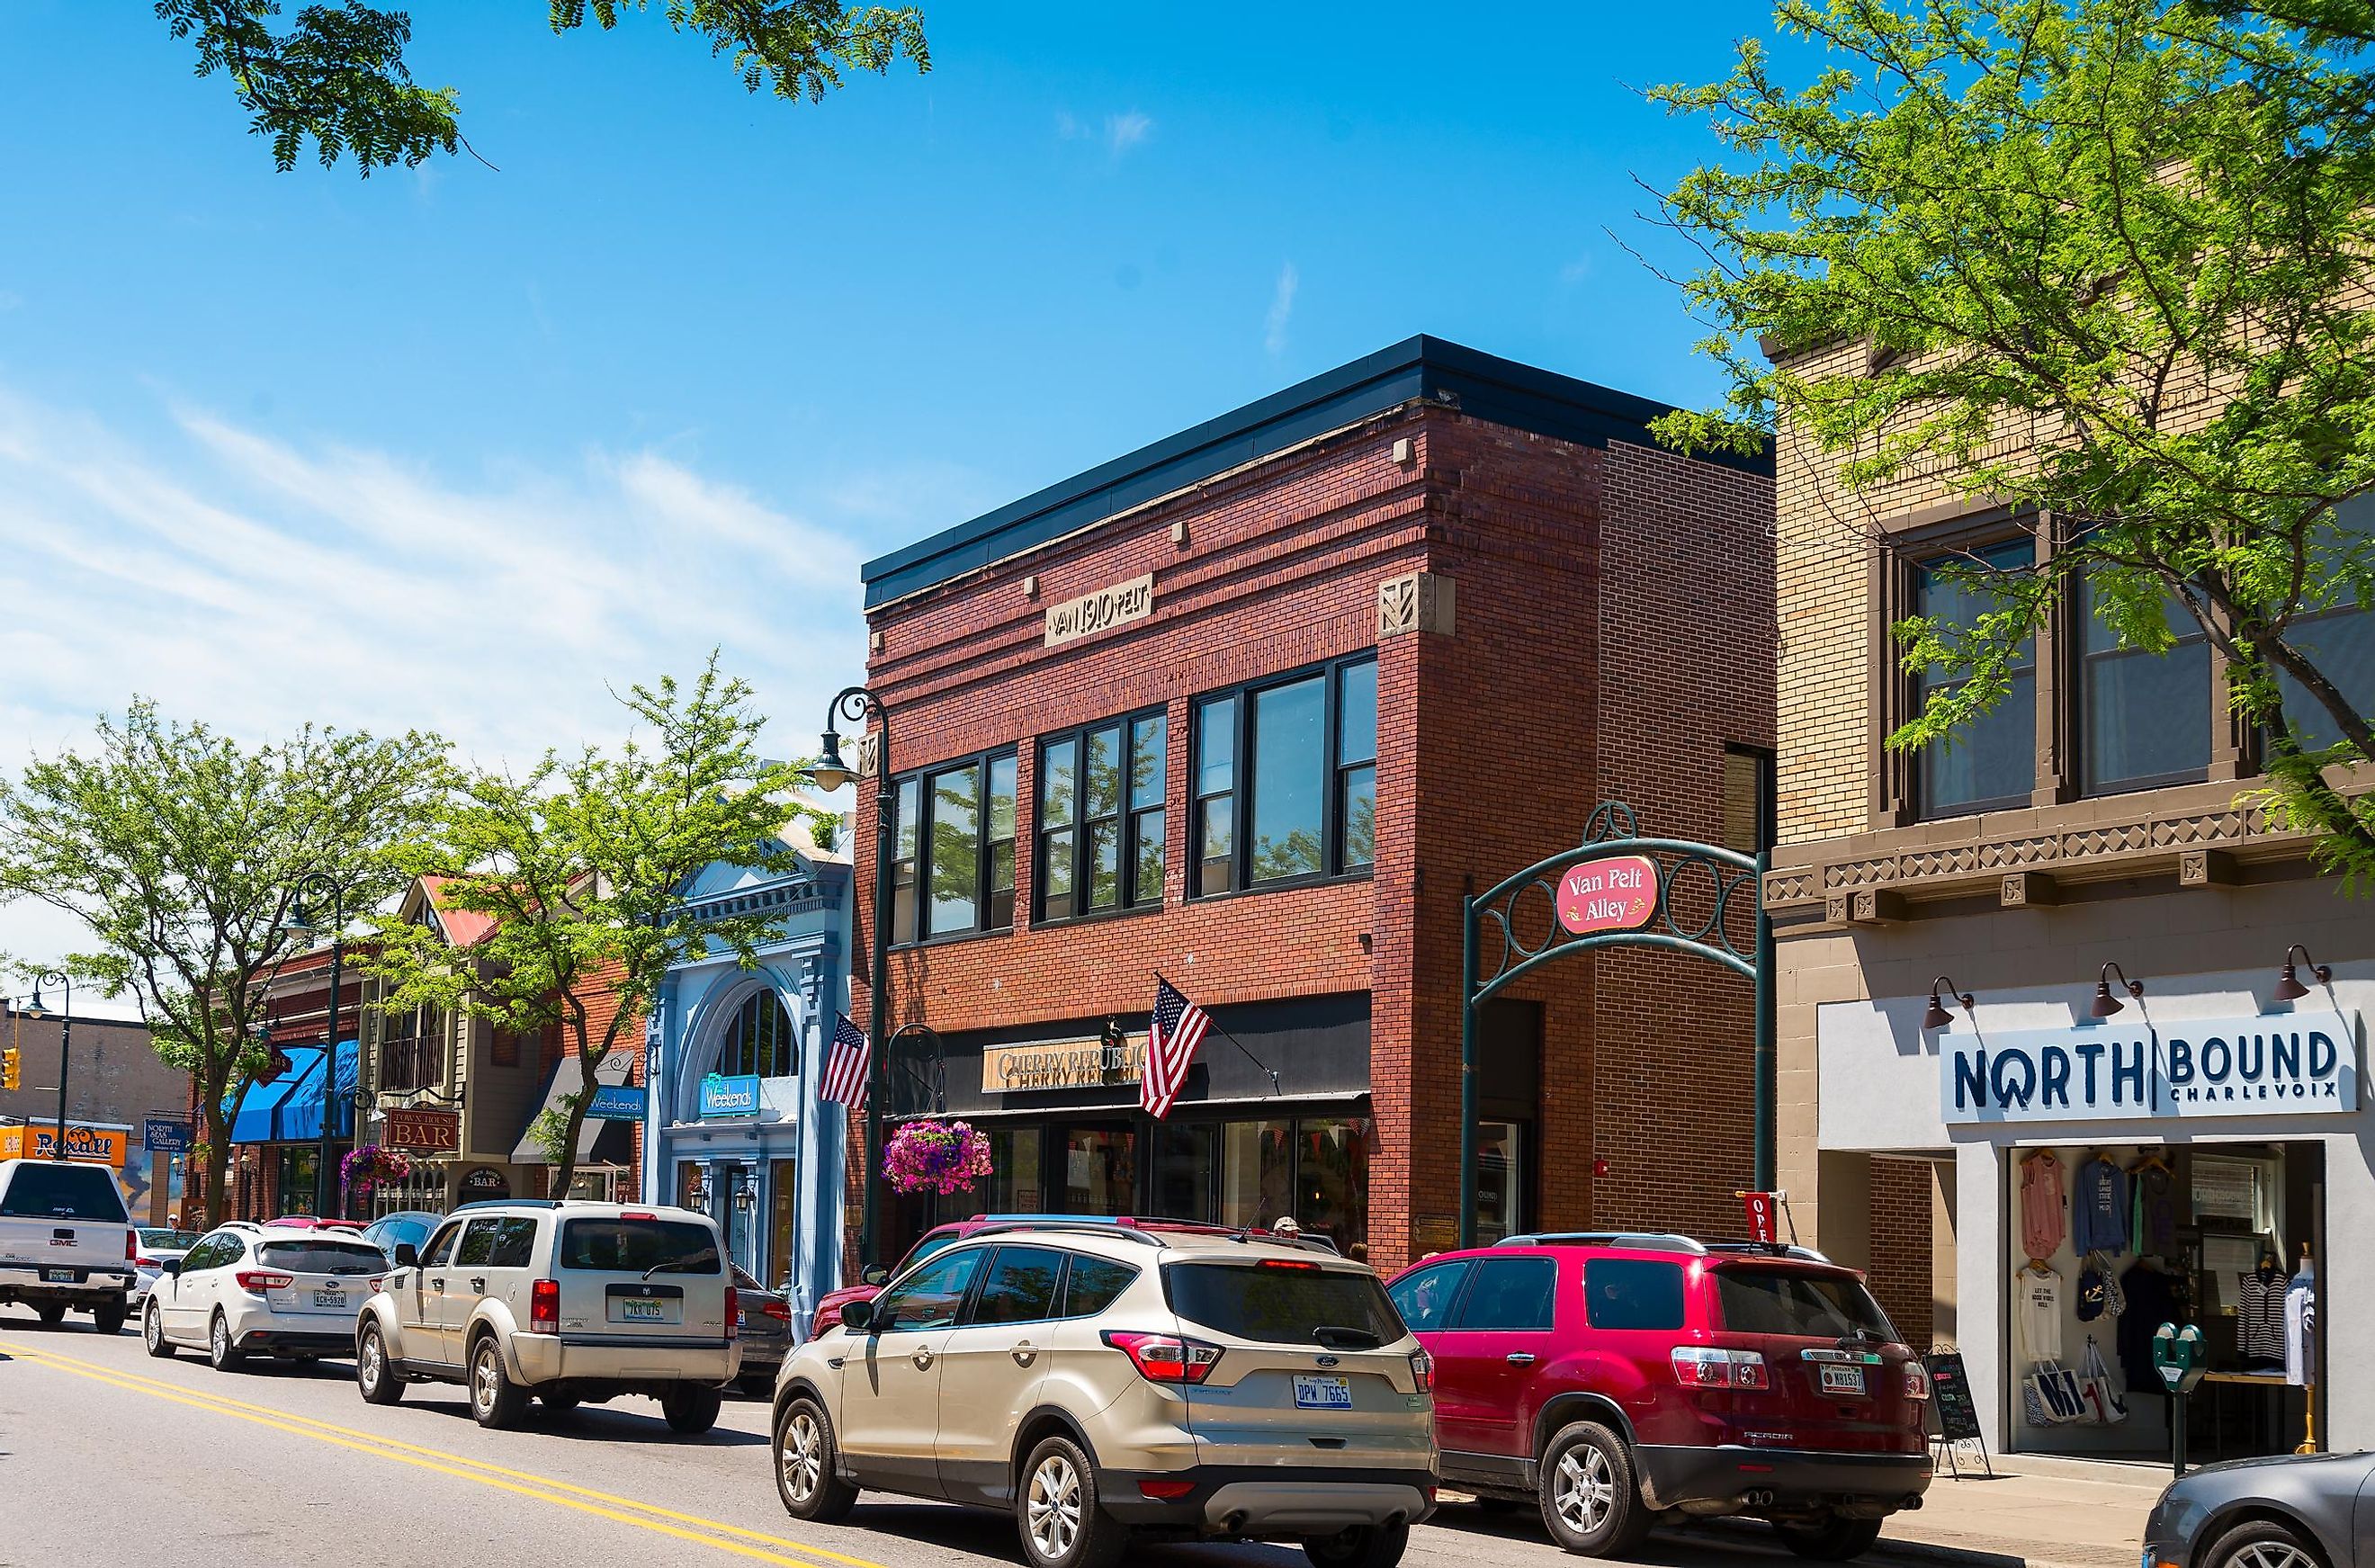 Charlevoix, Michigan: Bridge Street with many upscale shops across the Charlevoix Marina